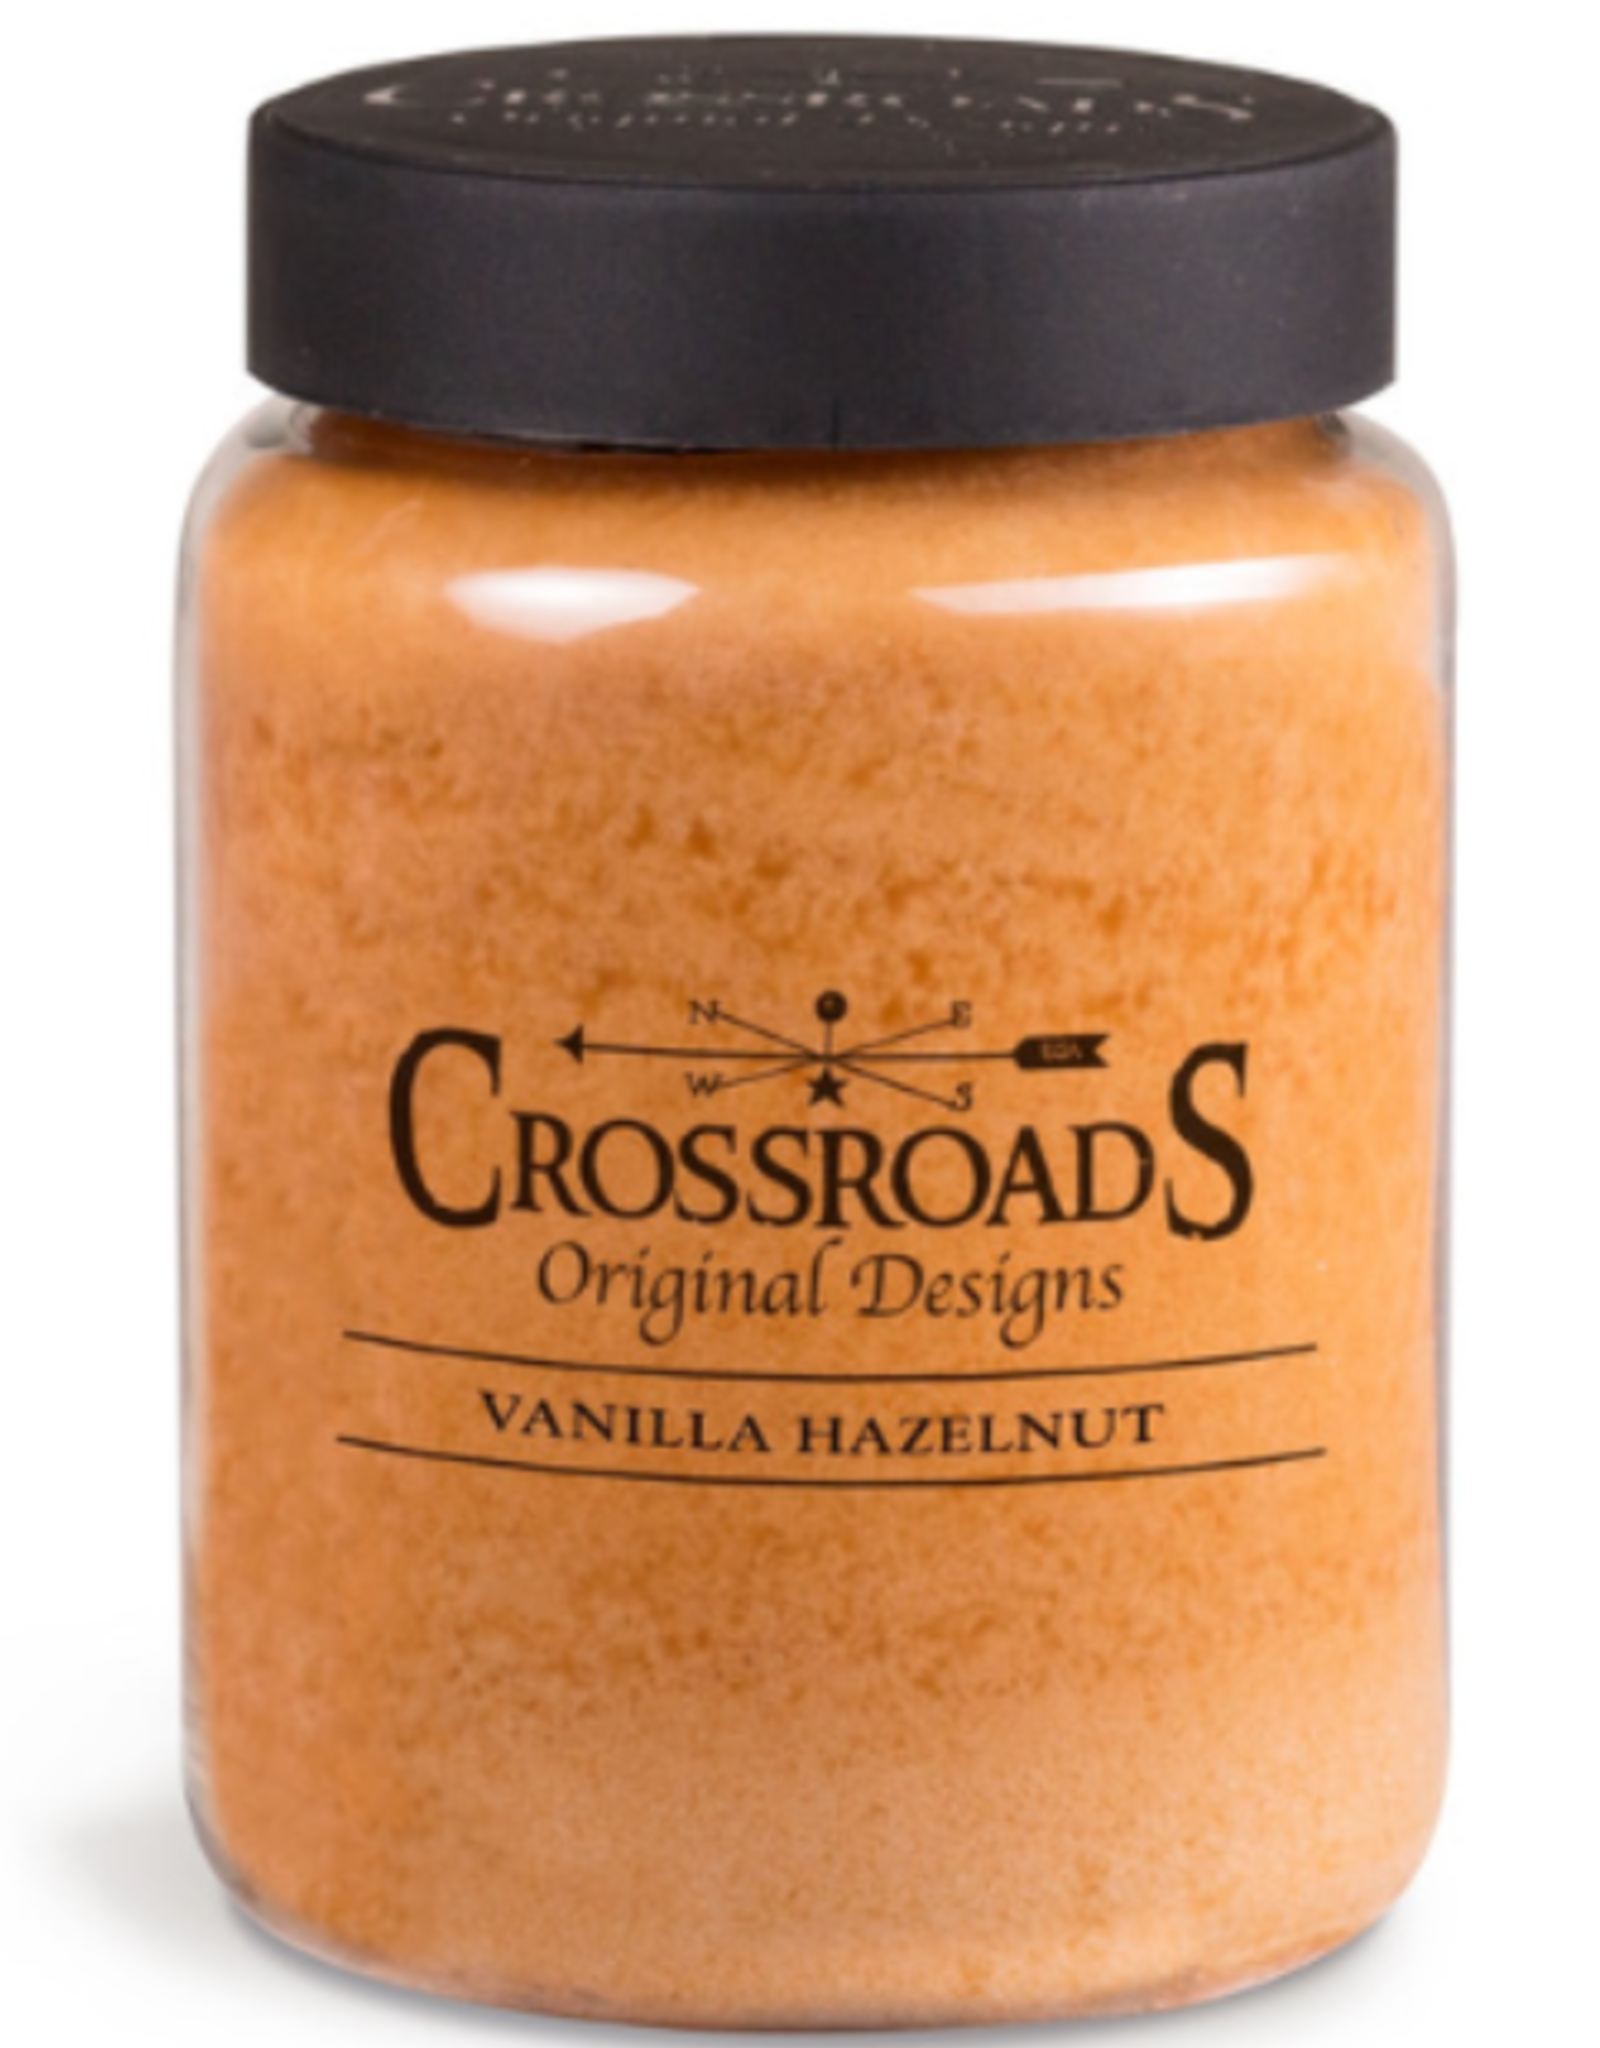 Crossroads Vanilla Hazelnut Candle